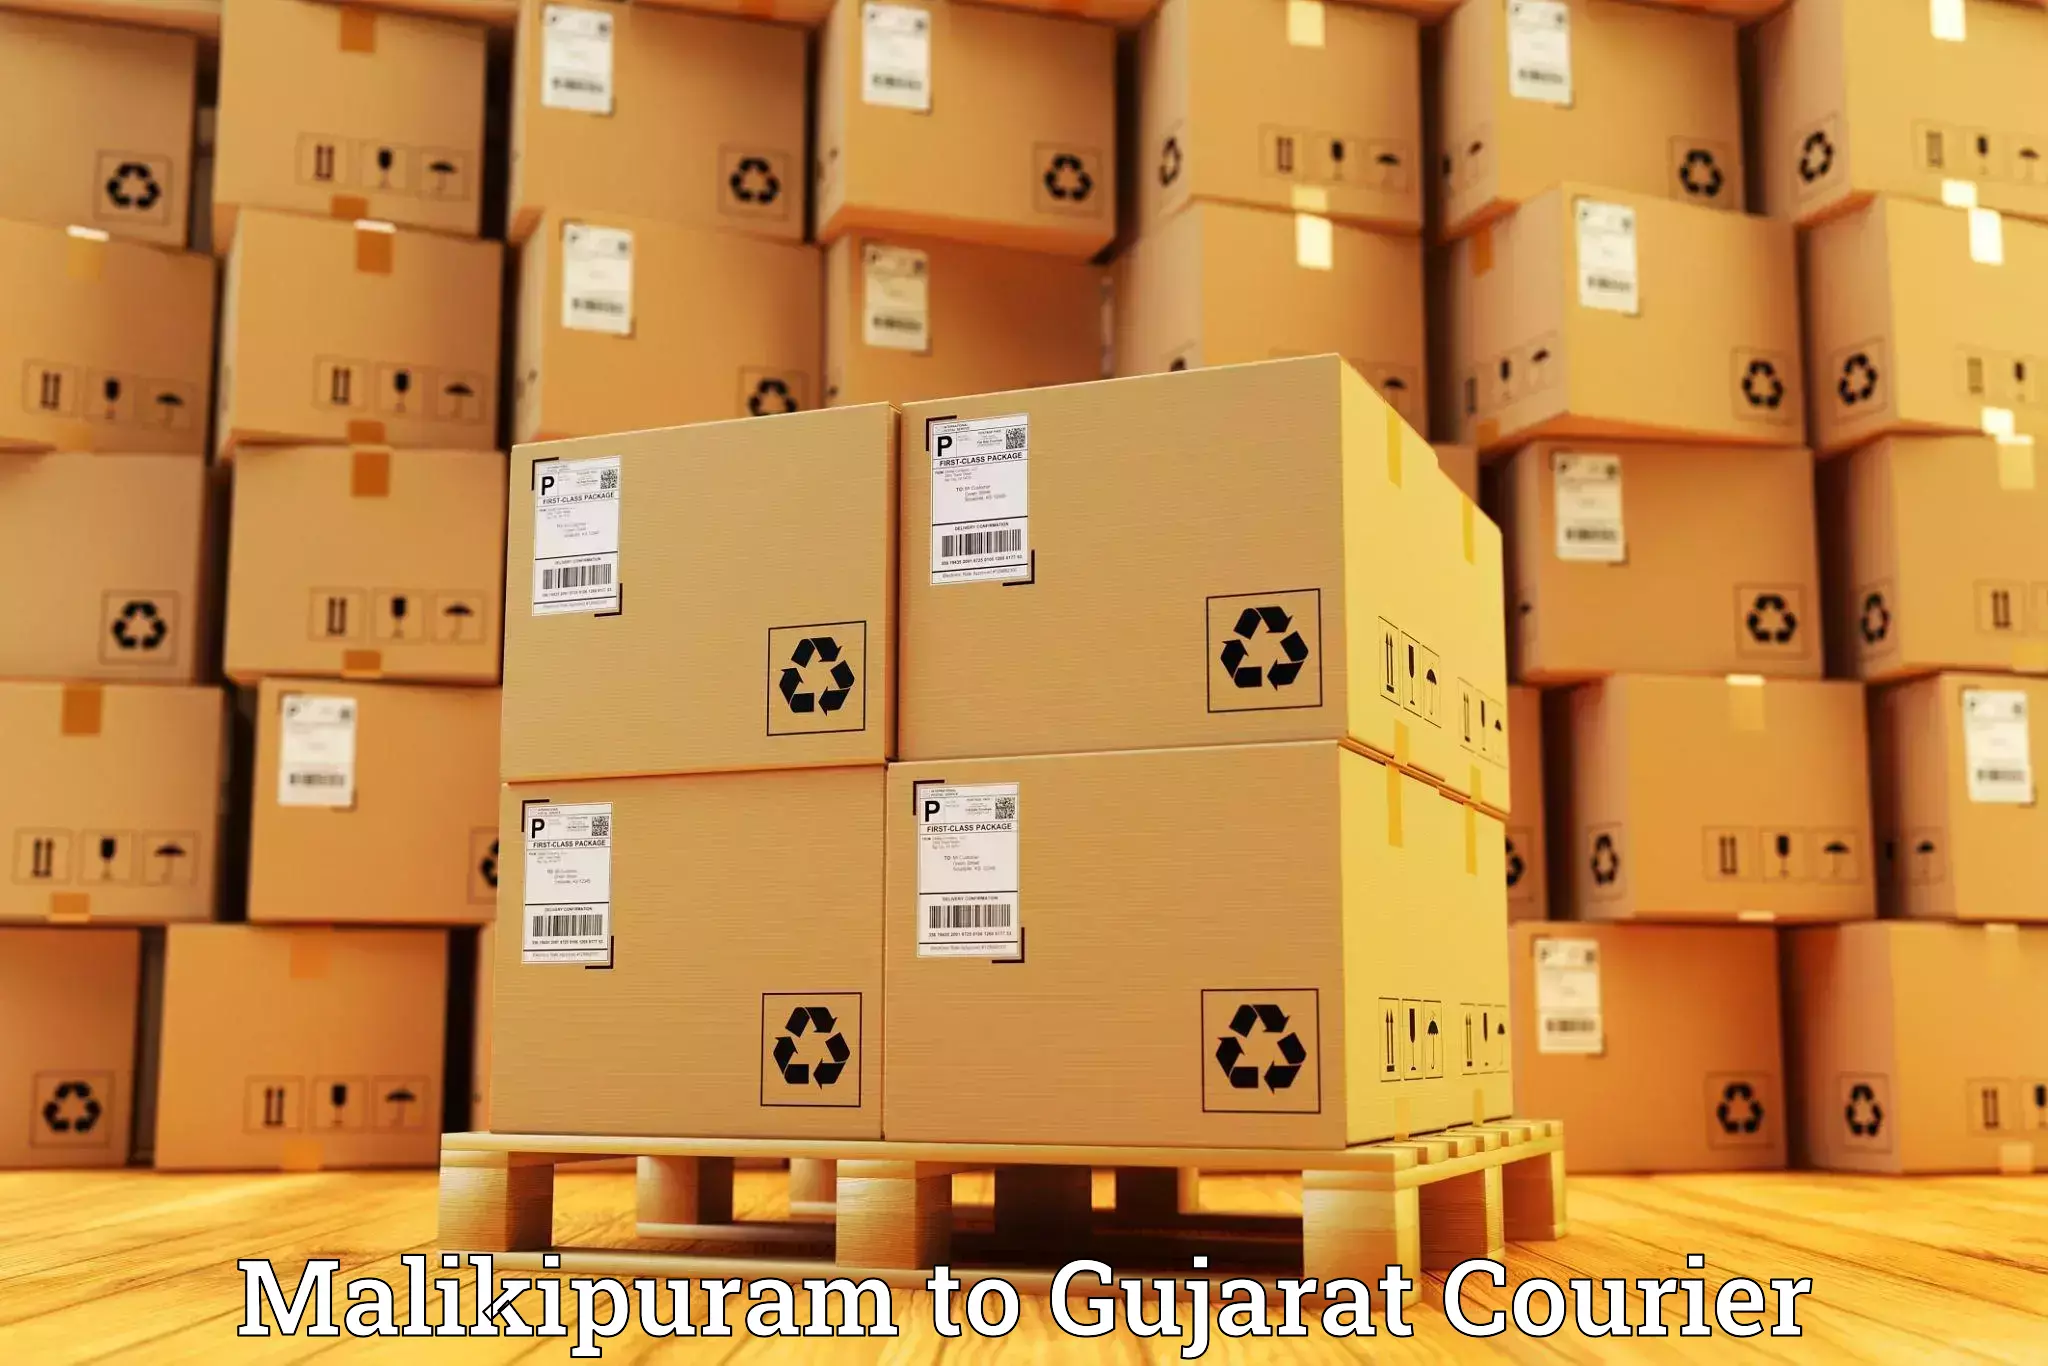 Next-generation courier services Malikipuram to Gujarat